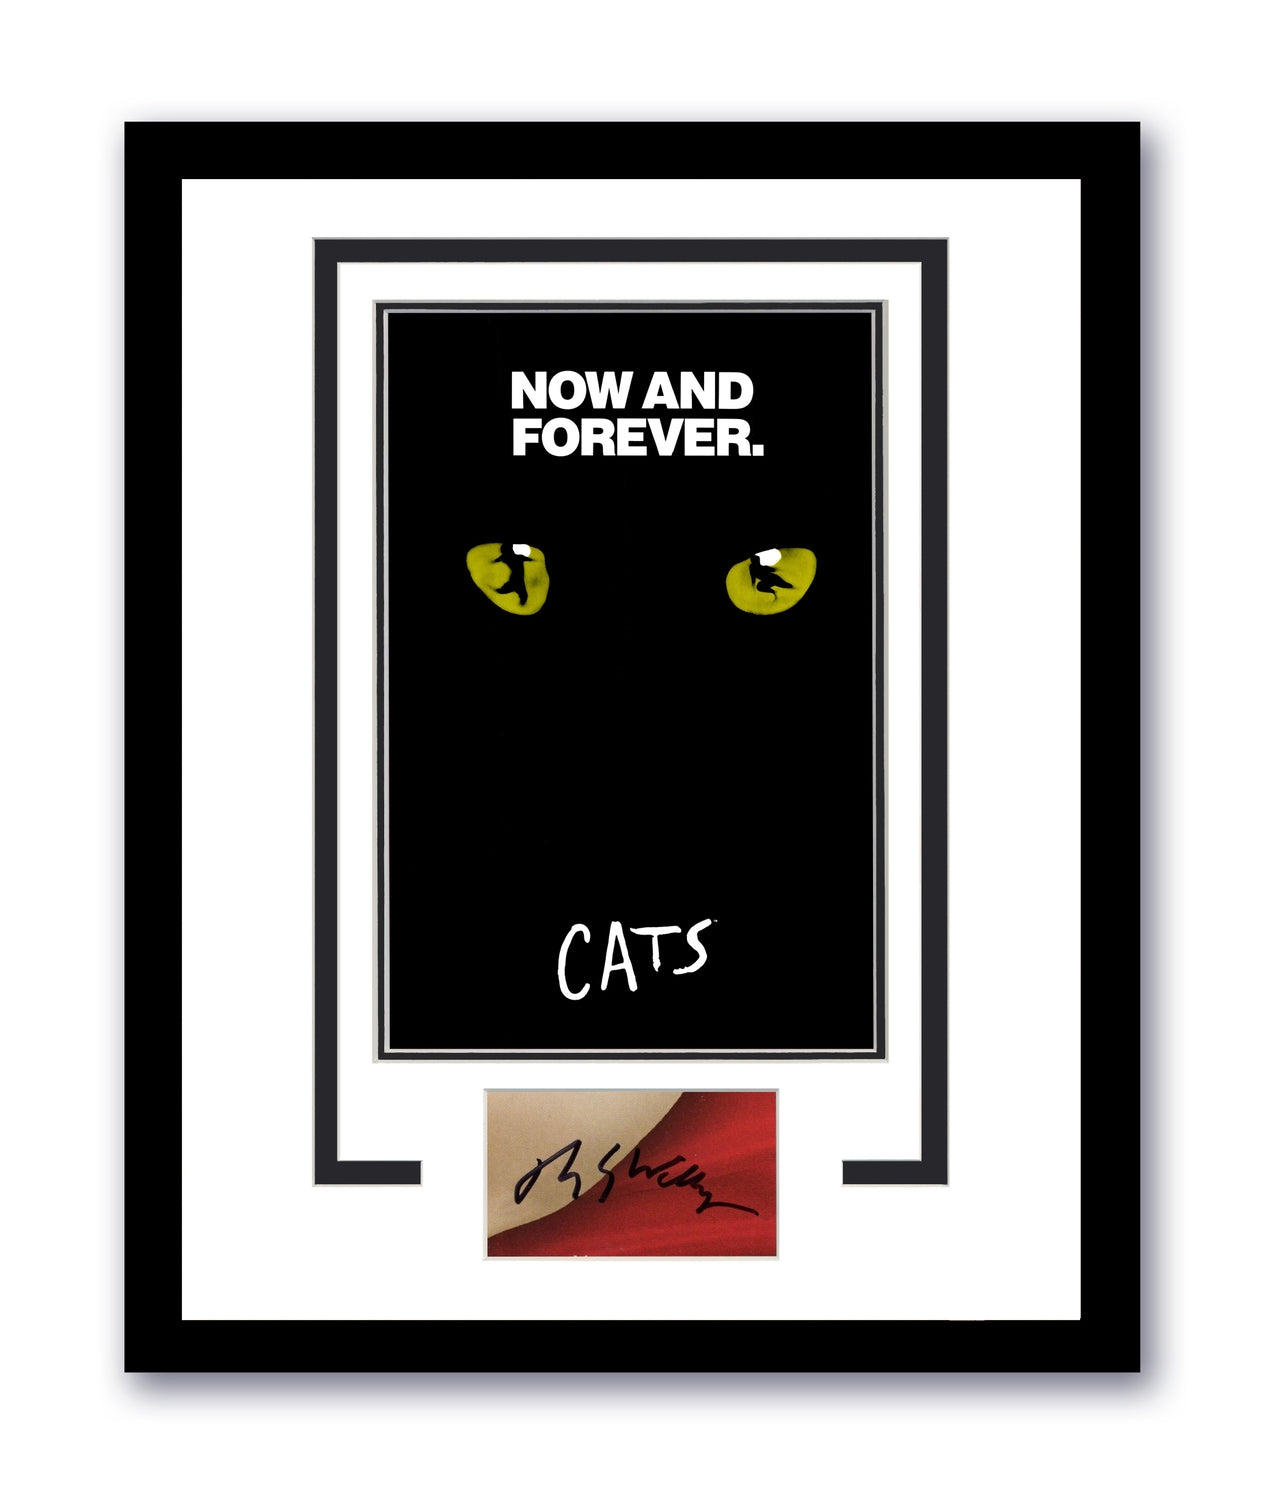 Andrew Lloyd Webber Autographed Signed 11x14 Framed CATS ACOA